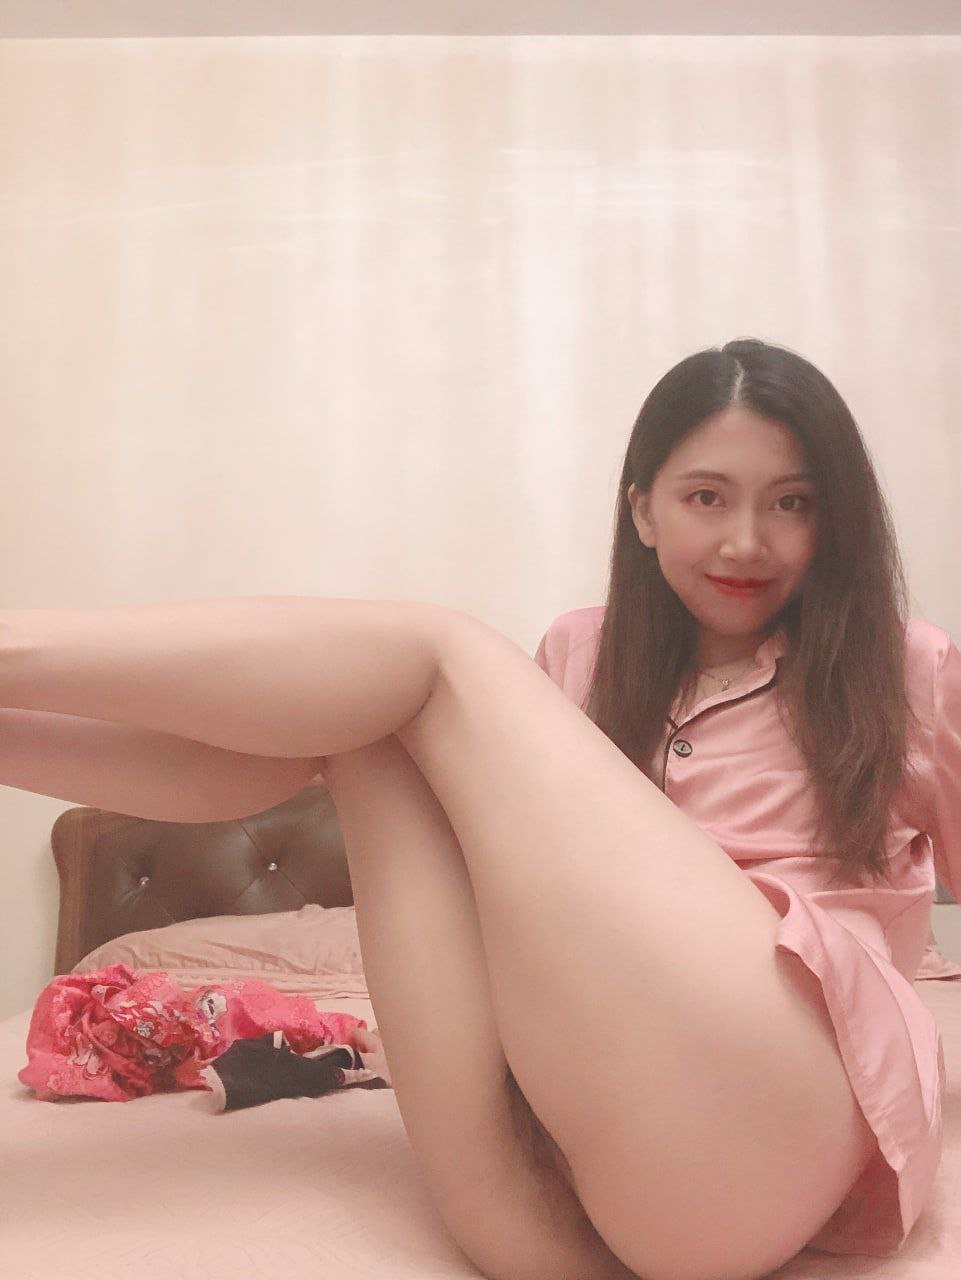 Asian Milf Nude - Asian MILF nudes exposed - Porn Videos & Photos - EroMe